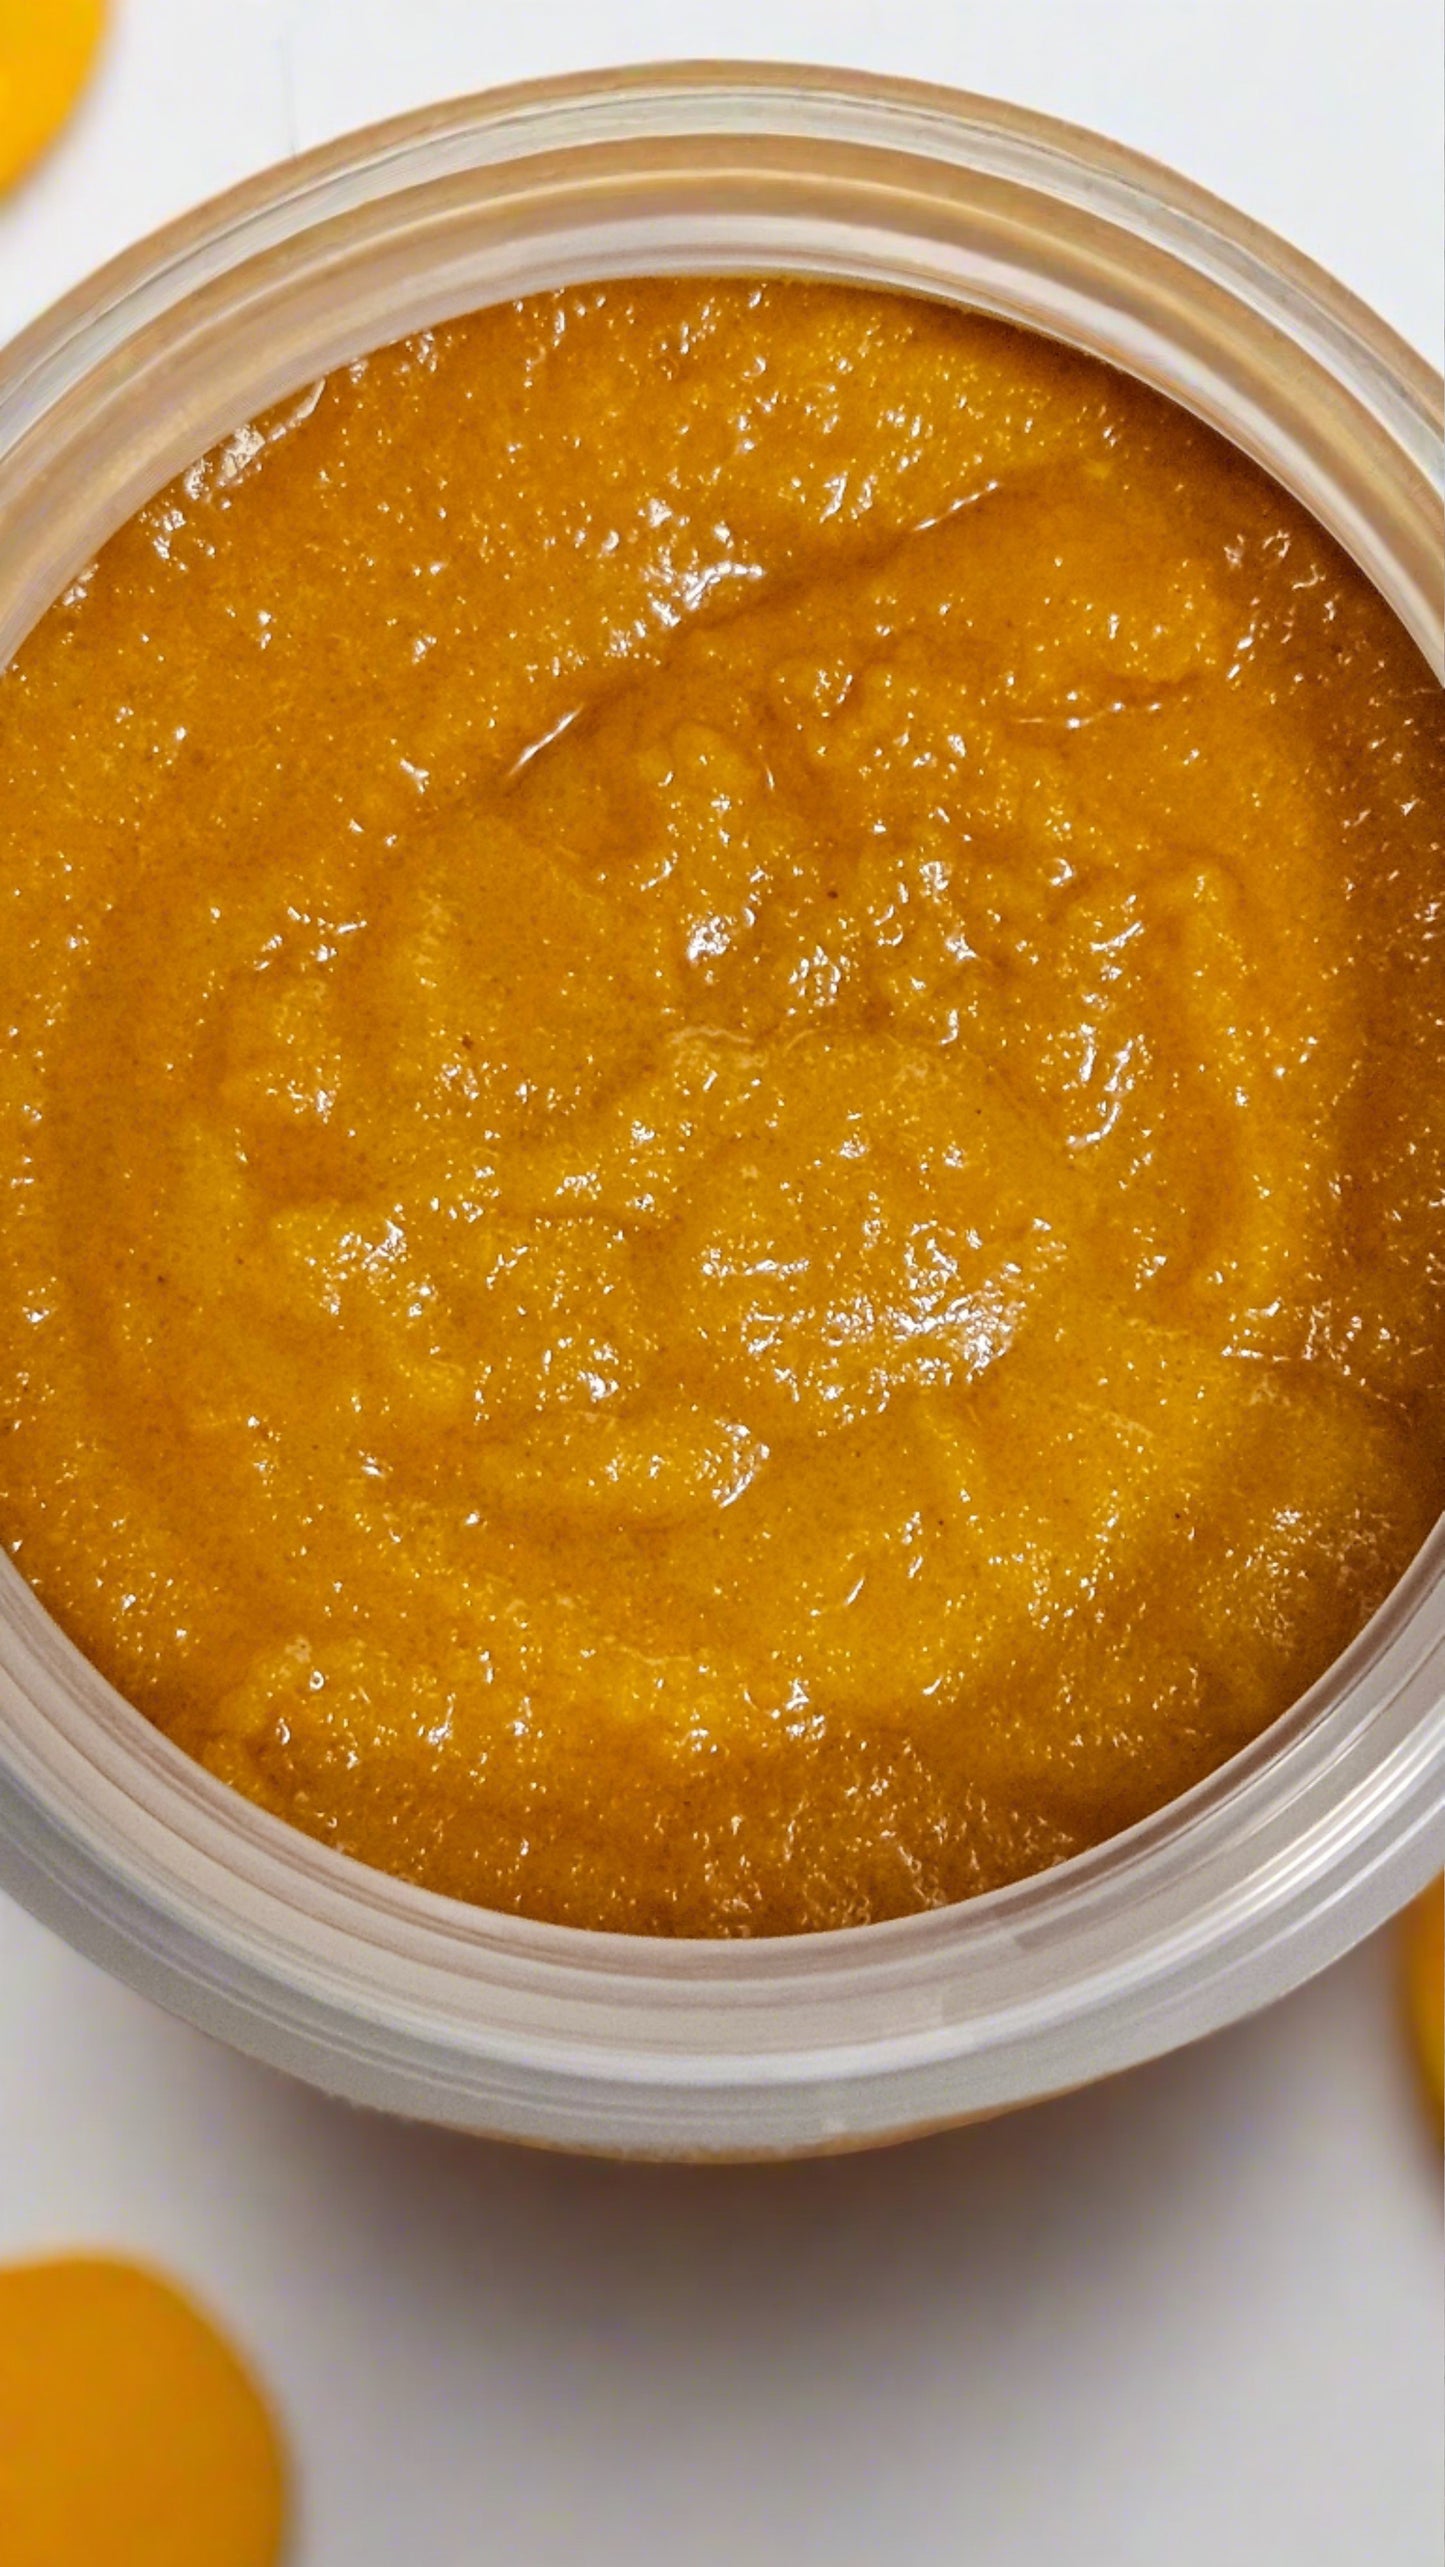 Top view of an open jar showing orange colored contents of Mango & Sugar Exfoliating Body Scrub - Clarifying Turmeric